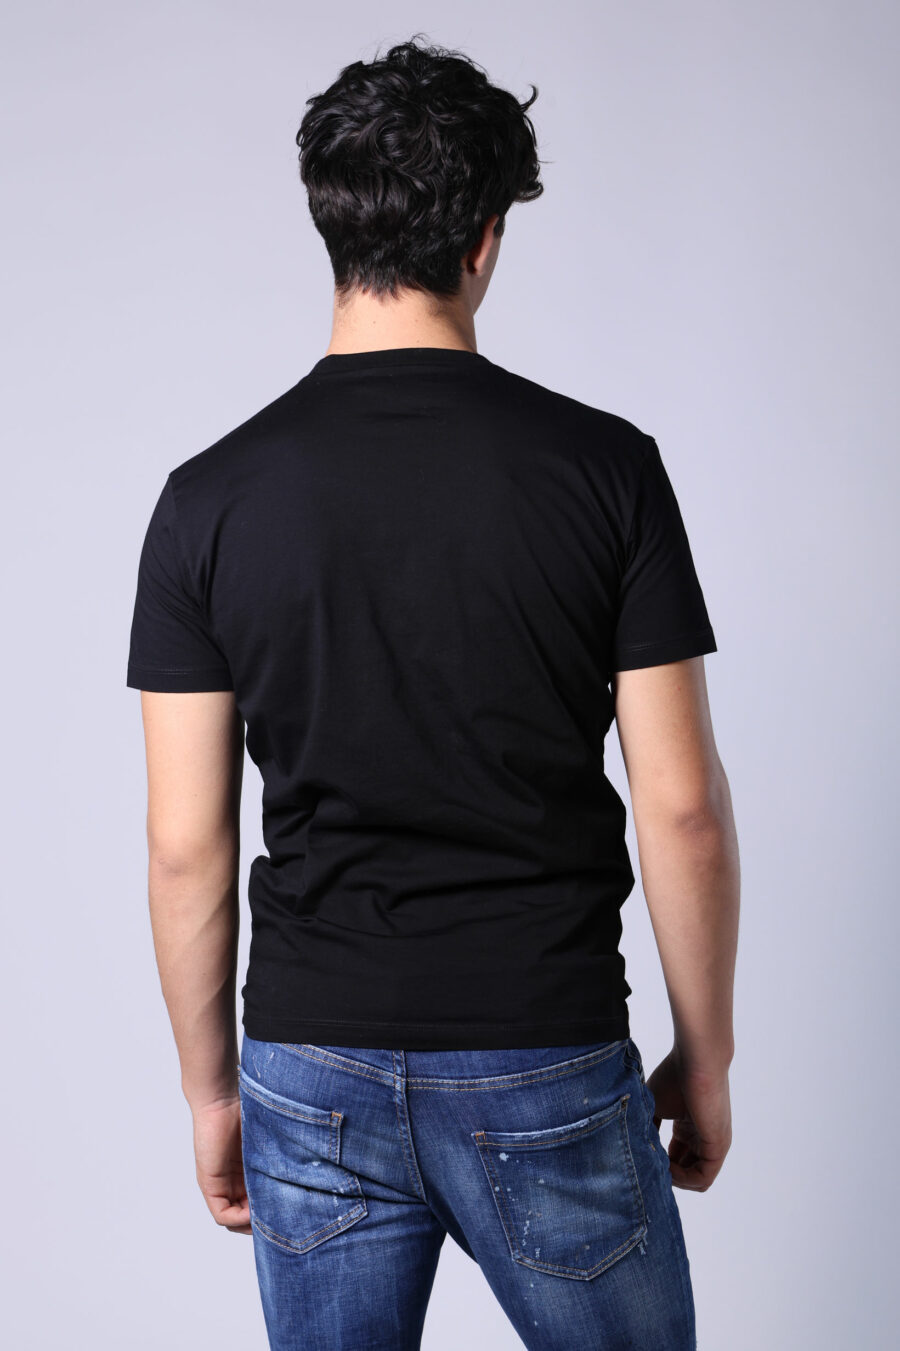 T-shirt preta com o logótipo maxi "university" branco - Untitled Catalog 05241